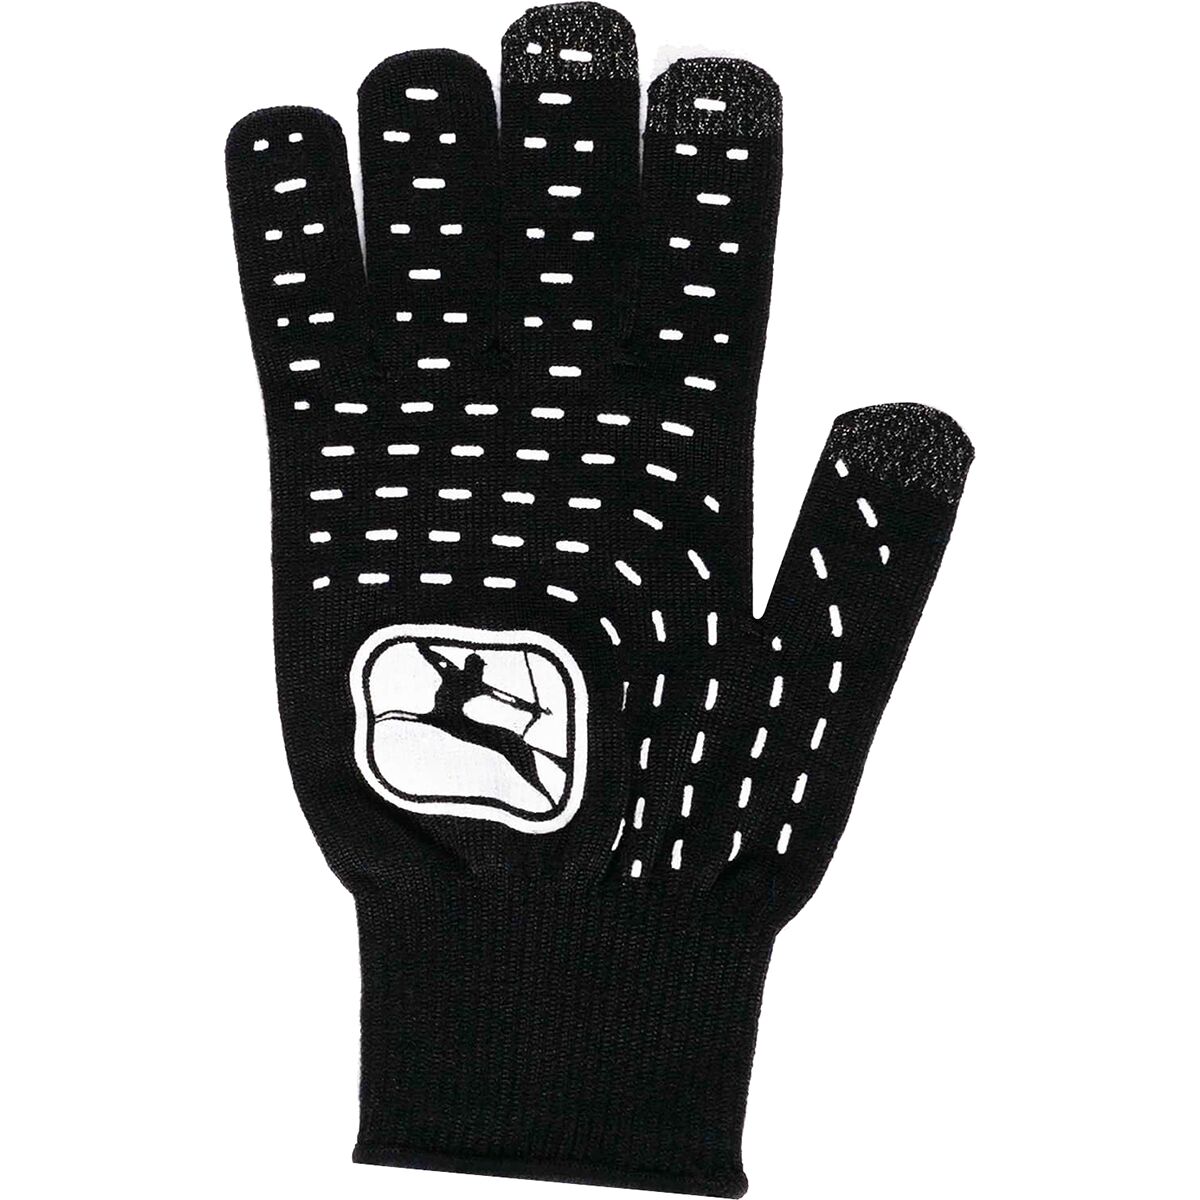 Giordana Knitted Cordura Winter Glove - Men's